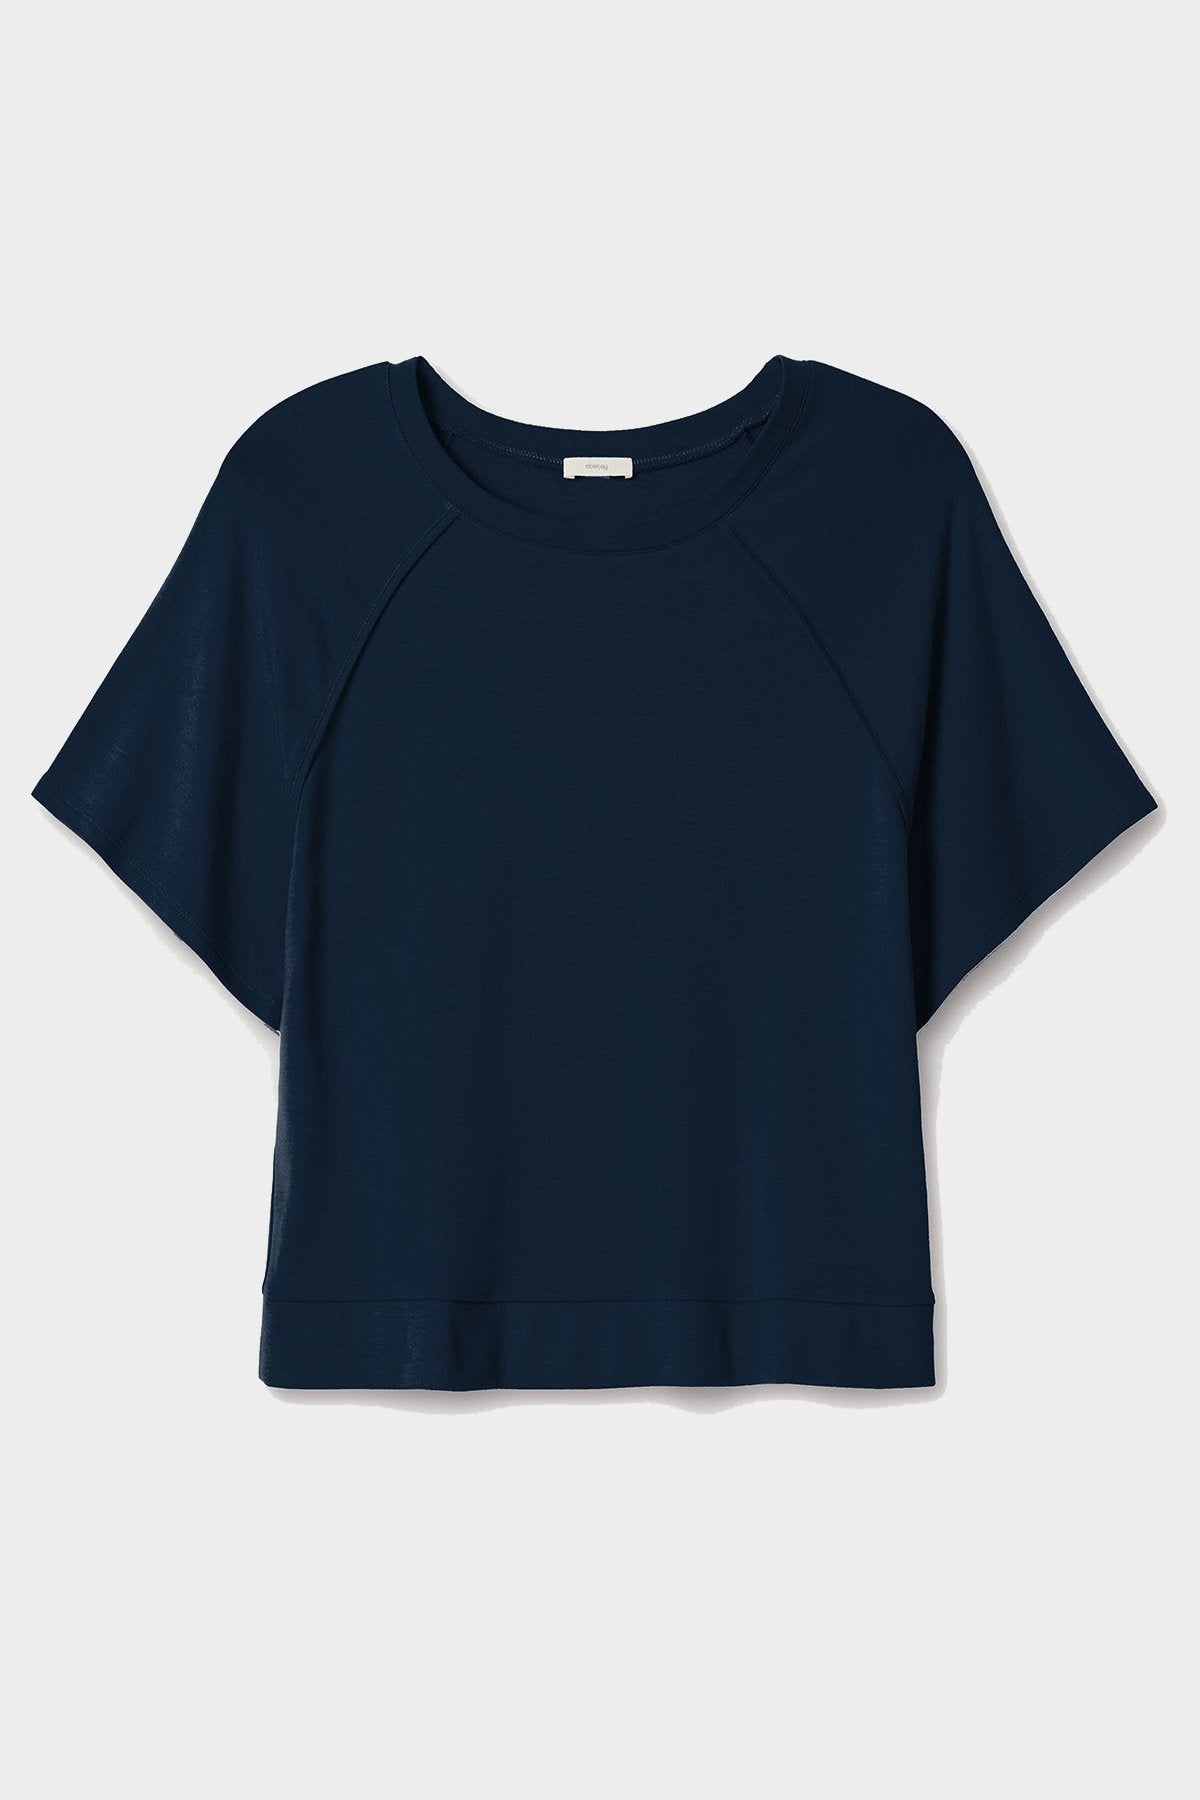 Blair Meadow Sweatshirt in Navy - shop-olivia.com